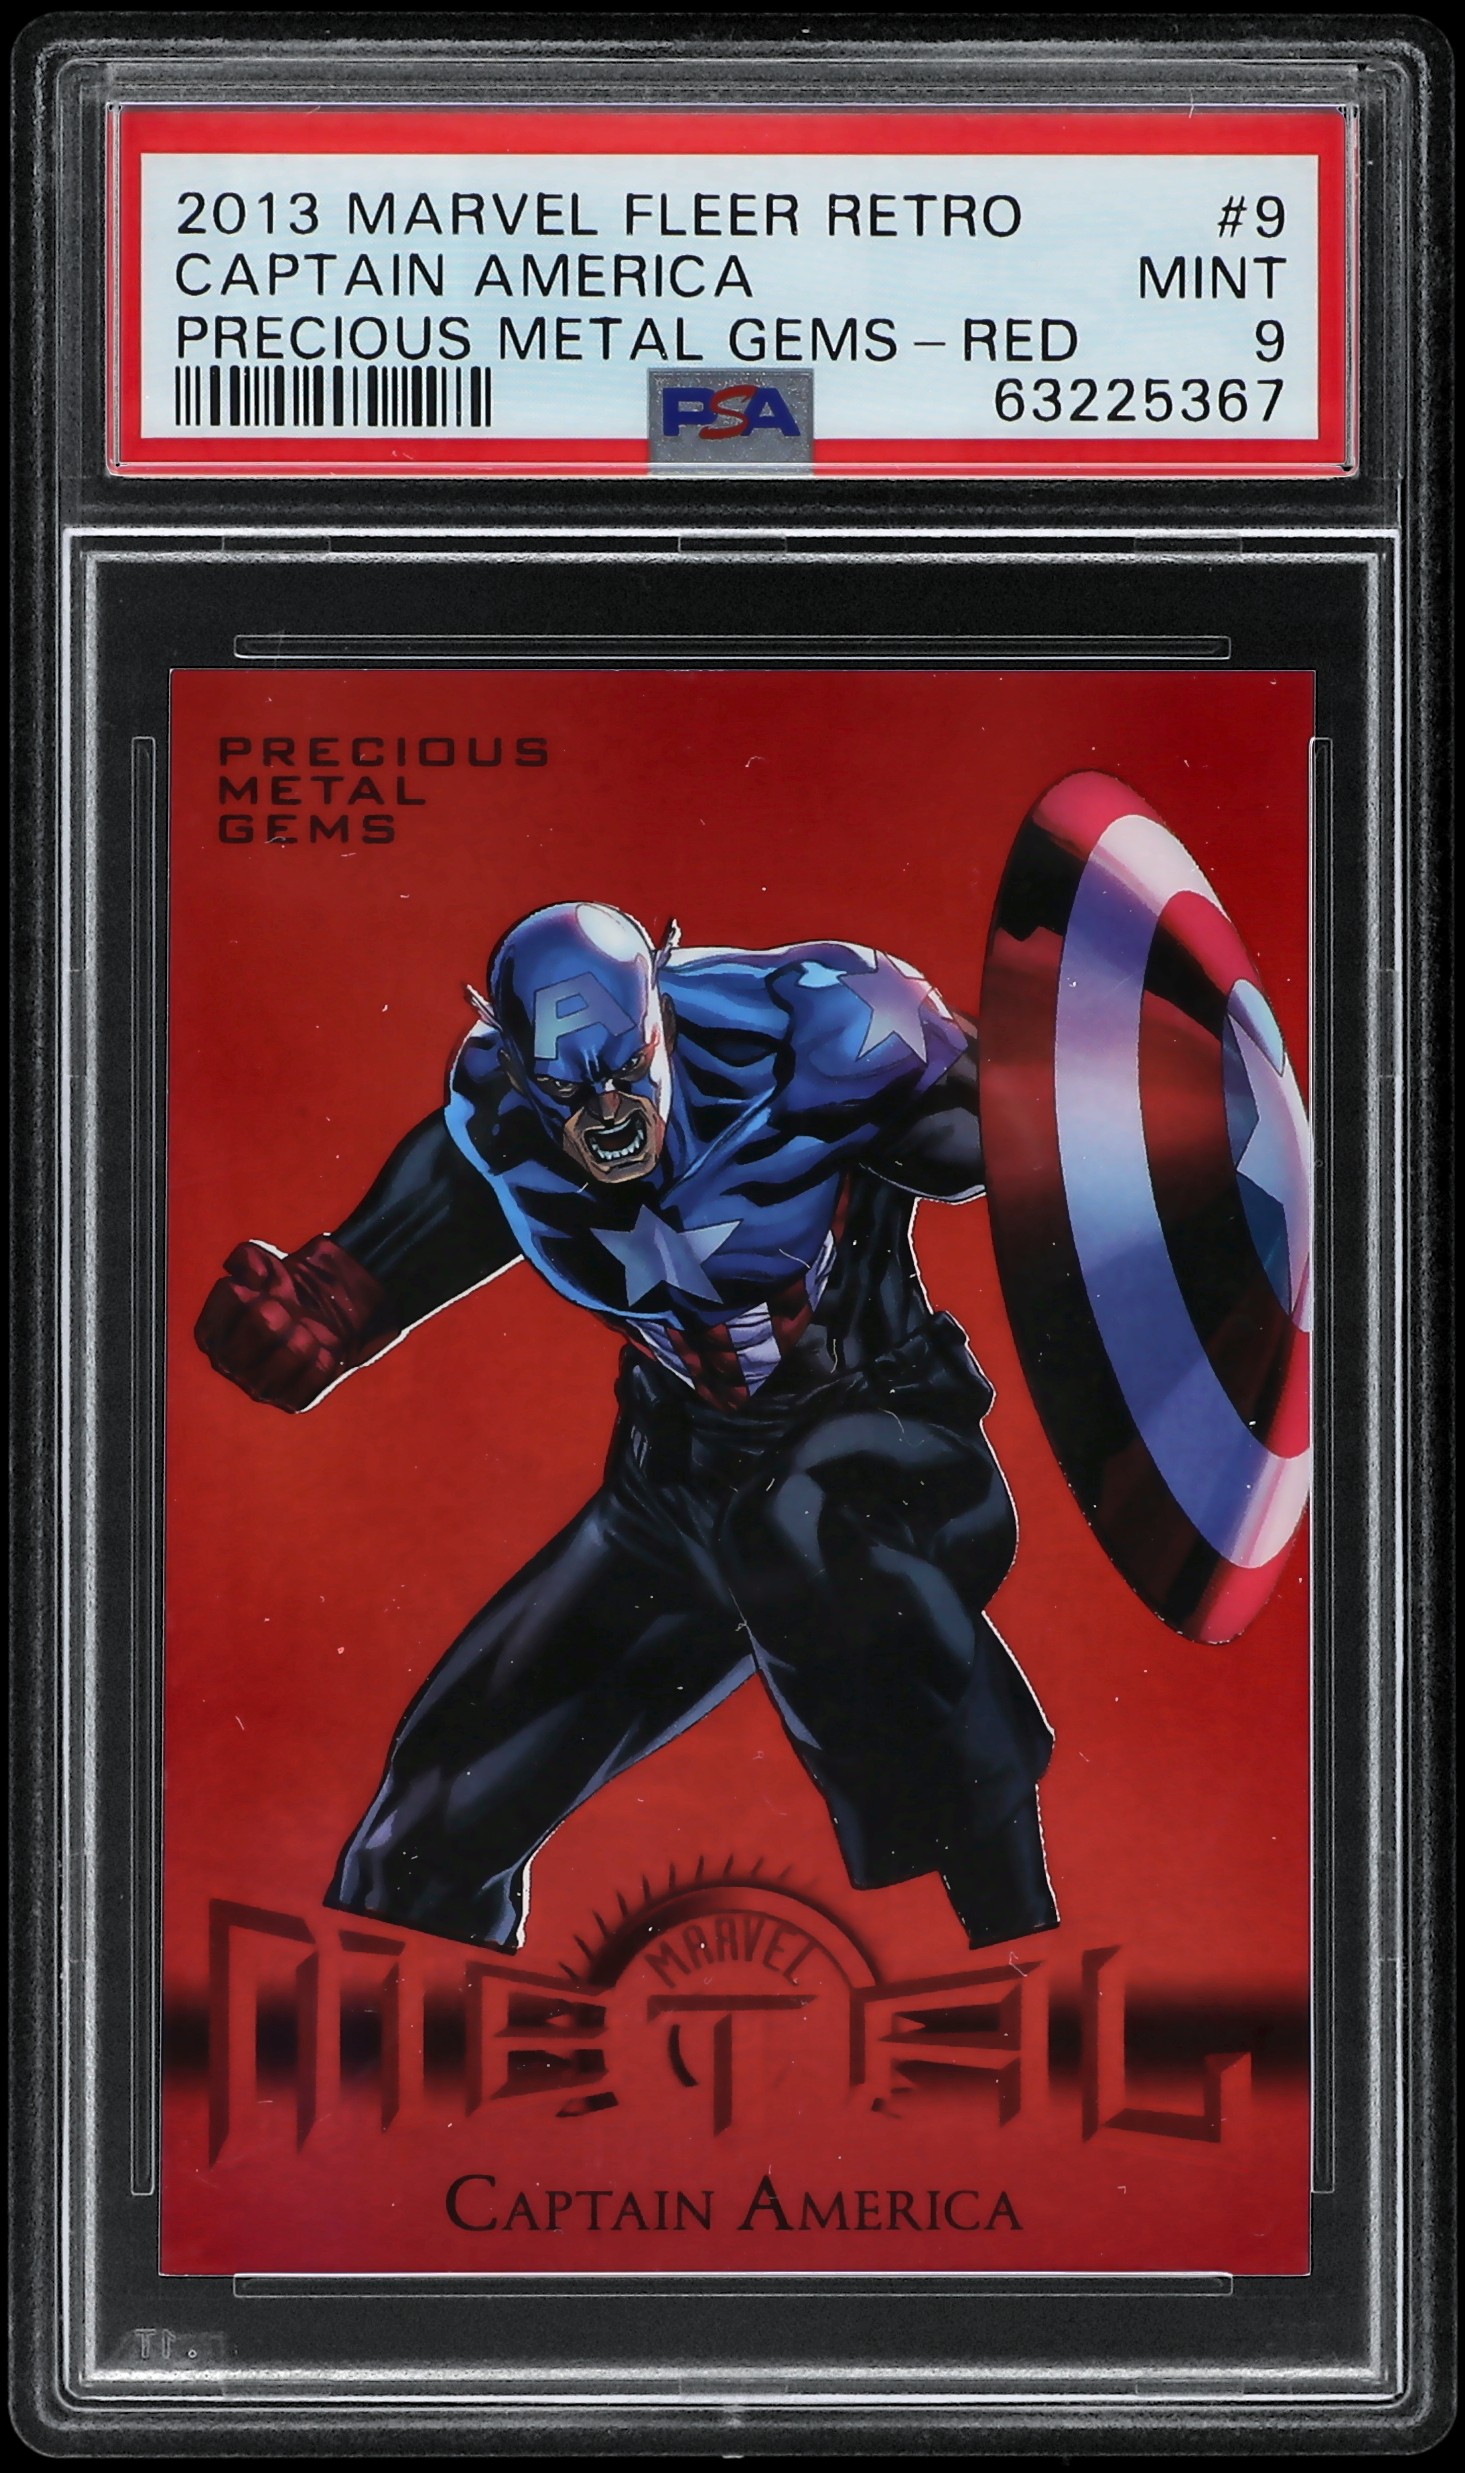 2013 Marvel Fleer Retro Precious Metal Gems (PMG) Red #9 Captain America (#017/100) - PSA MINT 9 - Pop 2
